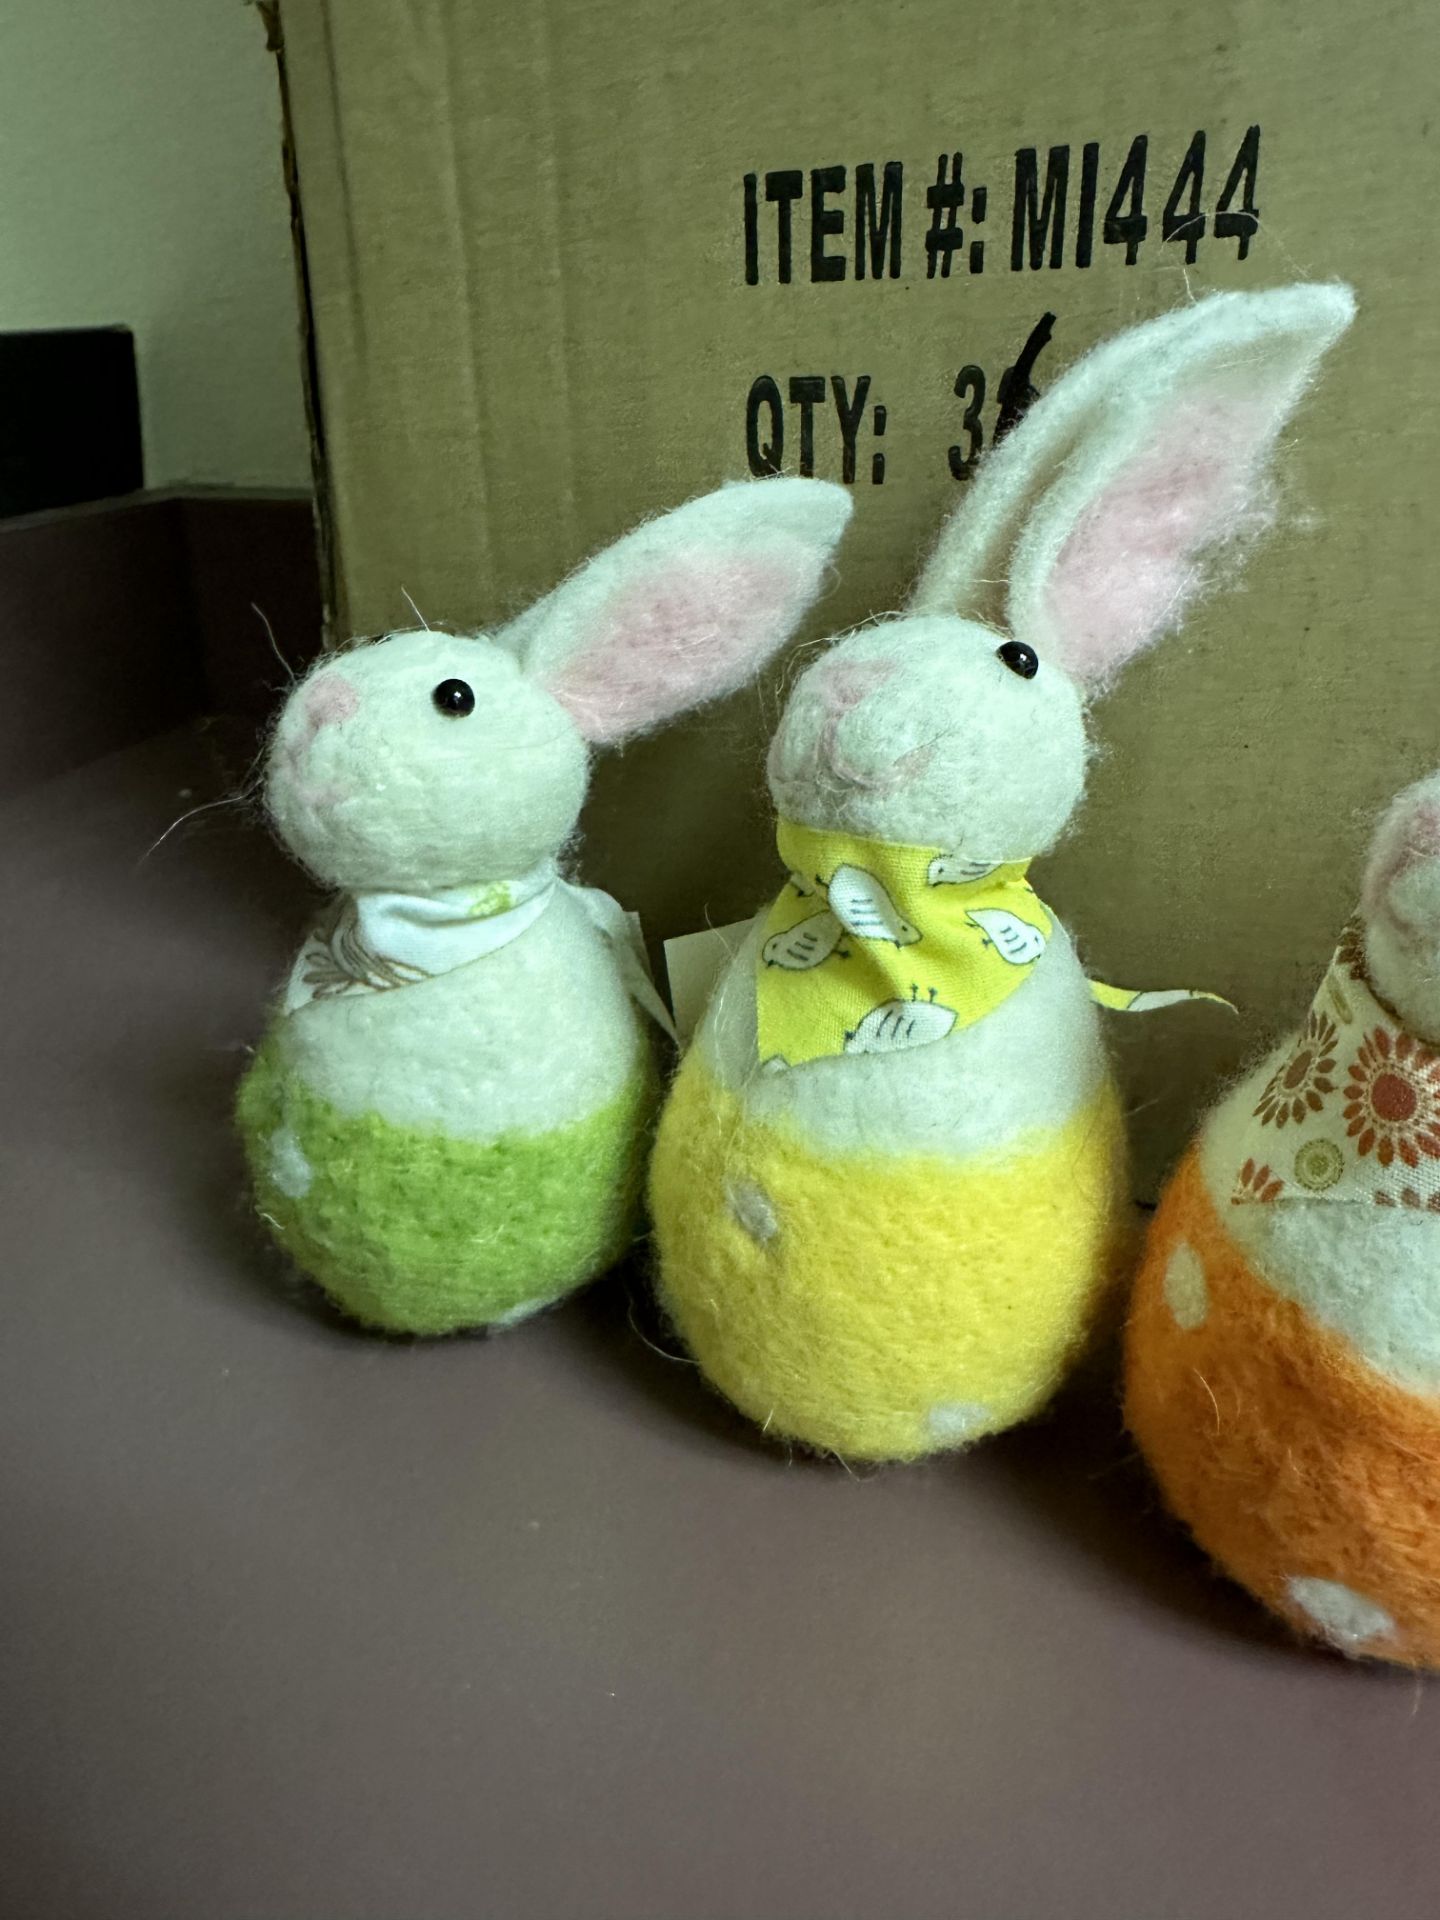 64x Bunny Rabbit Easter Plush Toys, Decorations, 4" MI444x2 - Image 3 of 4